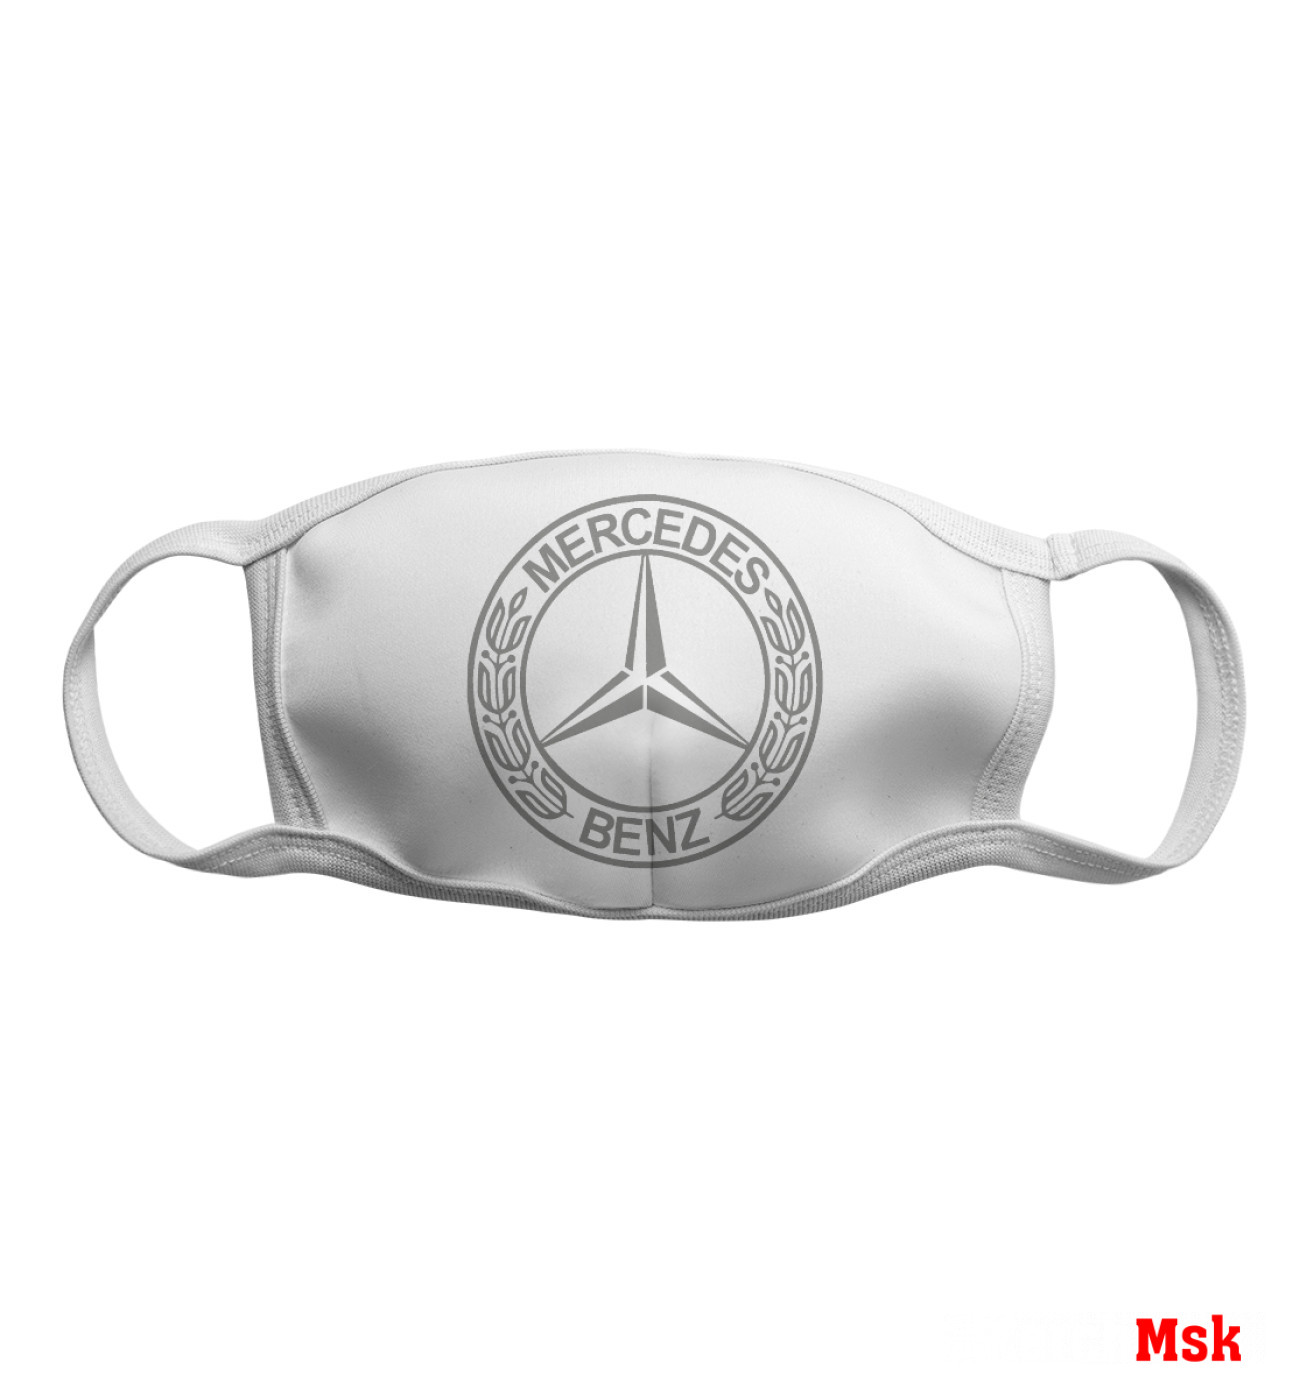 Мужская Маска Mercedes-Benz, артикул: MER-145478-msk-2